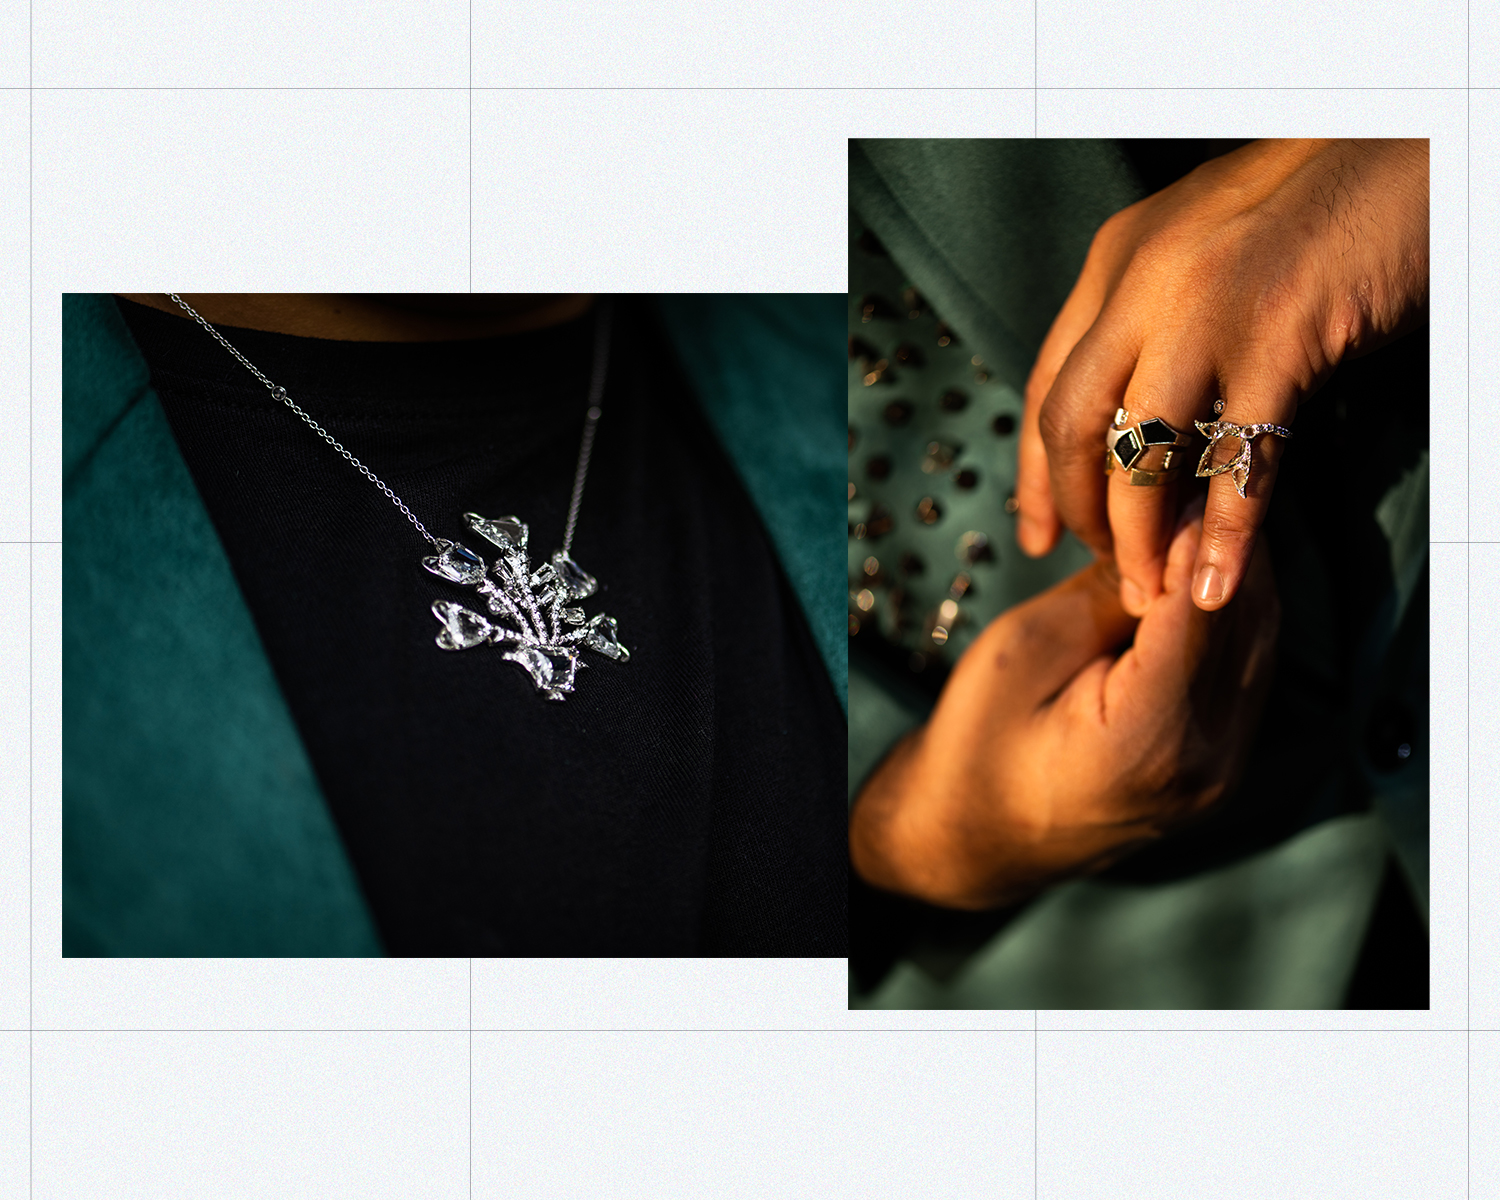 Unique Ring Designs with Portrait and Rose Cut Diamonds.